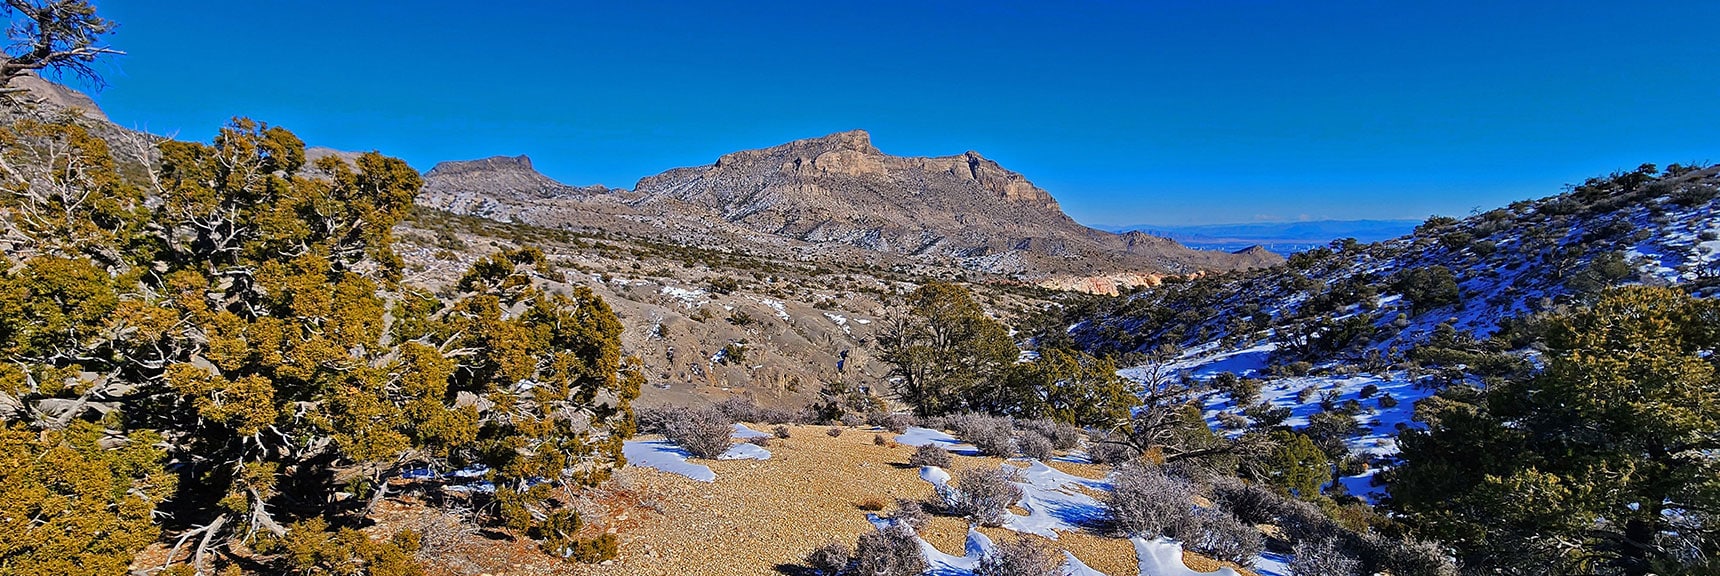 Looking Ahead from Saddle to Damsel Peak & Brownstone Basin! | 3 Basin Circuit | Calico Basin, Brownstone Basin, Red Rock Canyon, Nevada